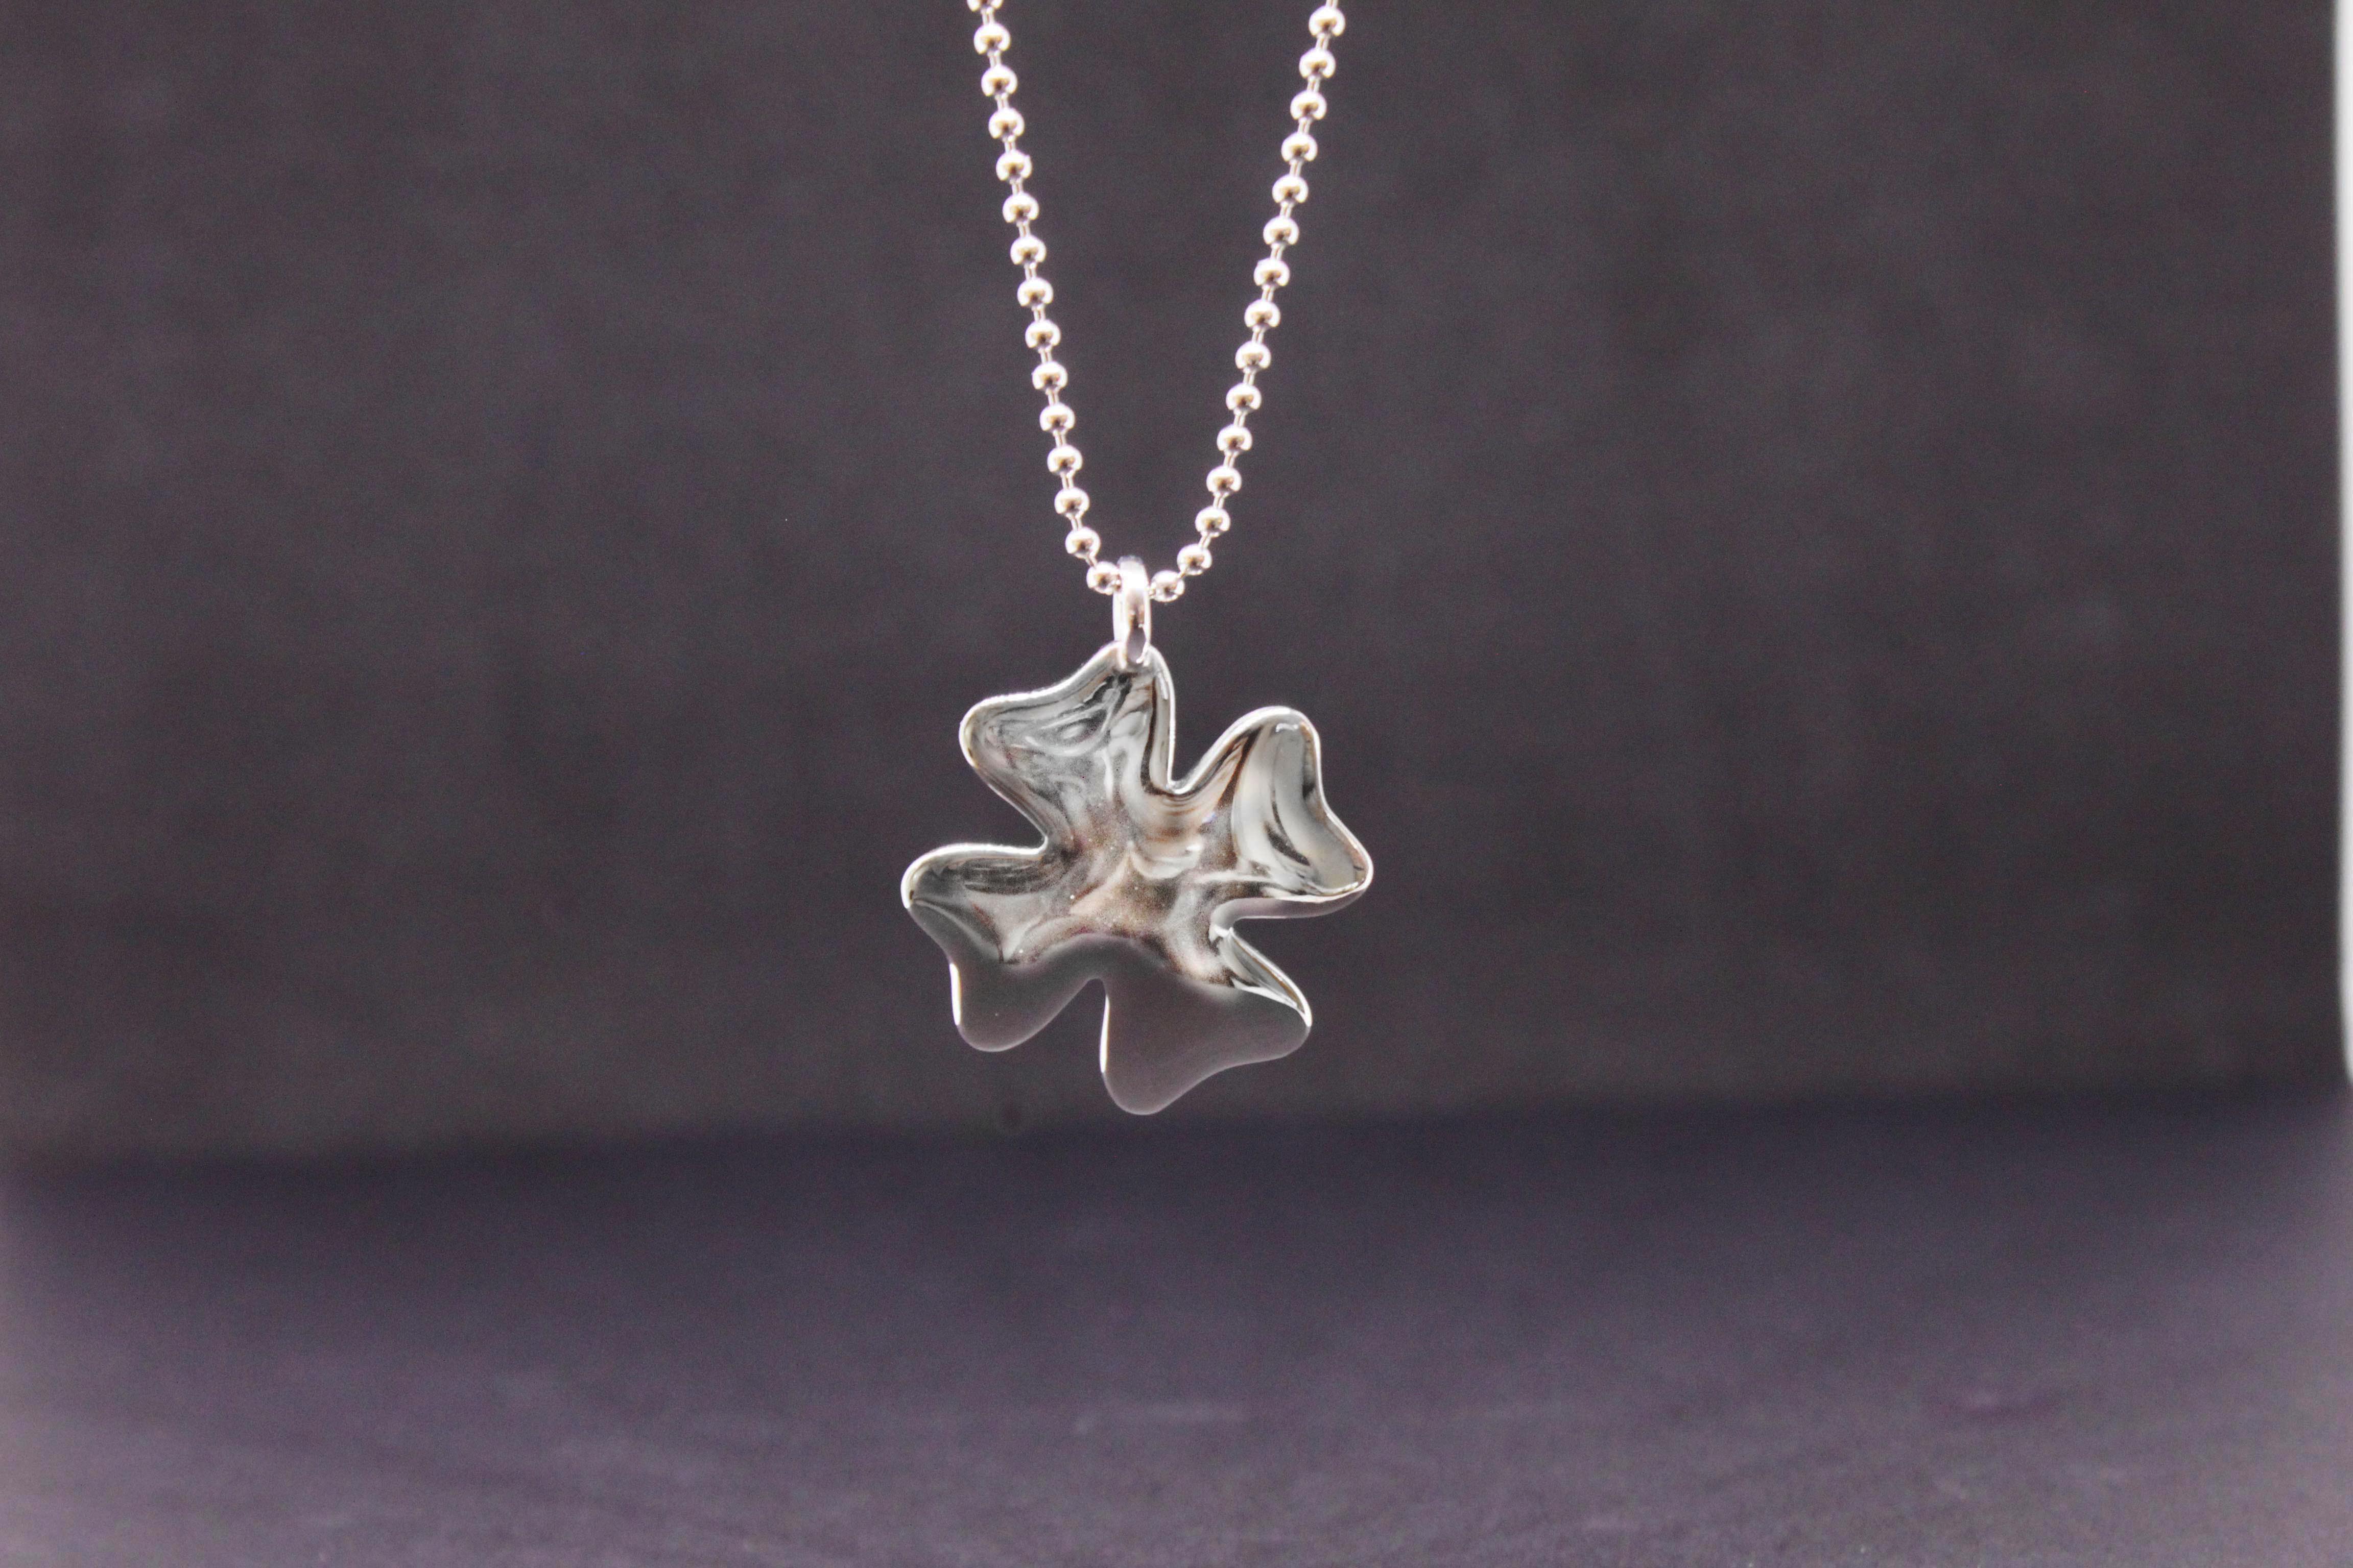 silver four-leaf clover pendant with long necklace 90 cm